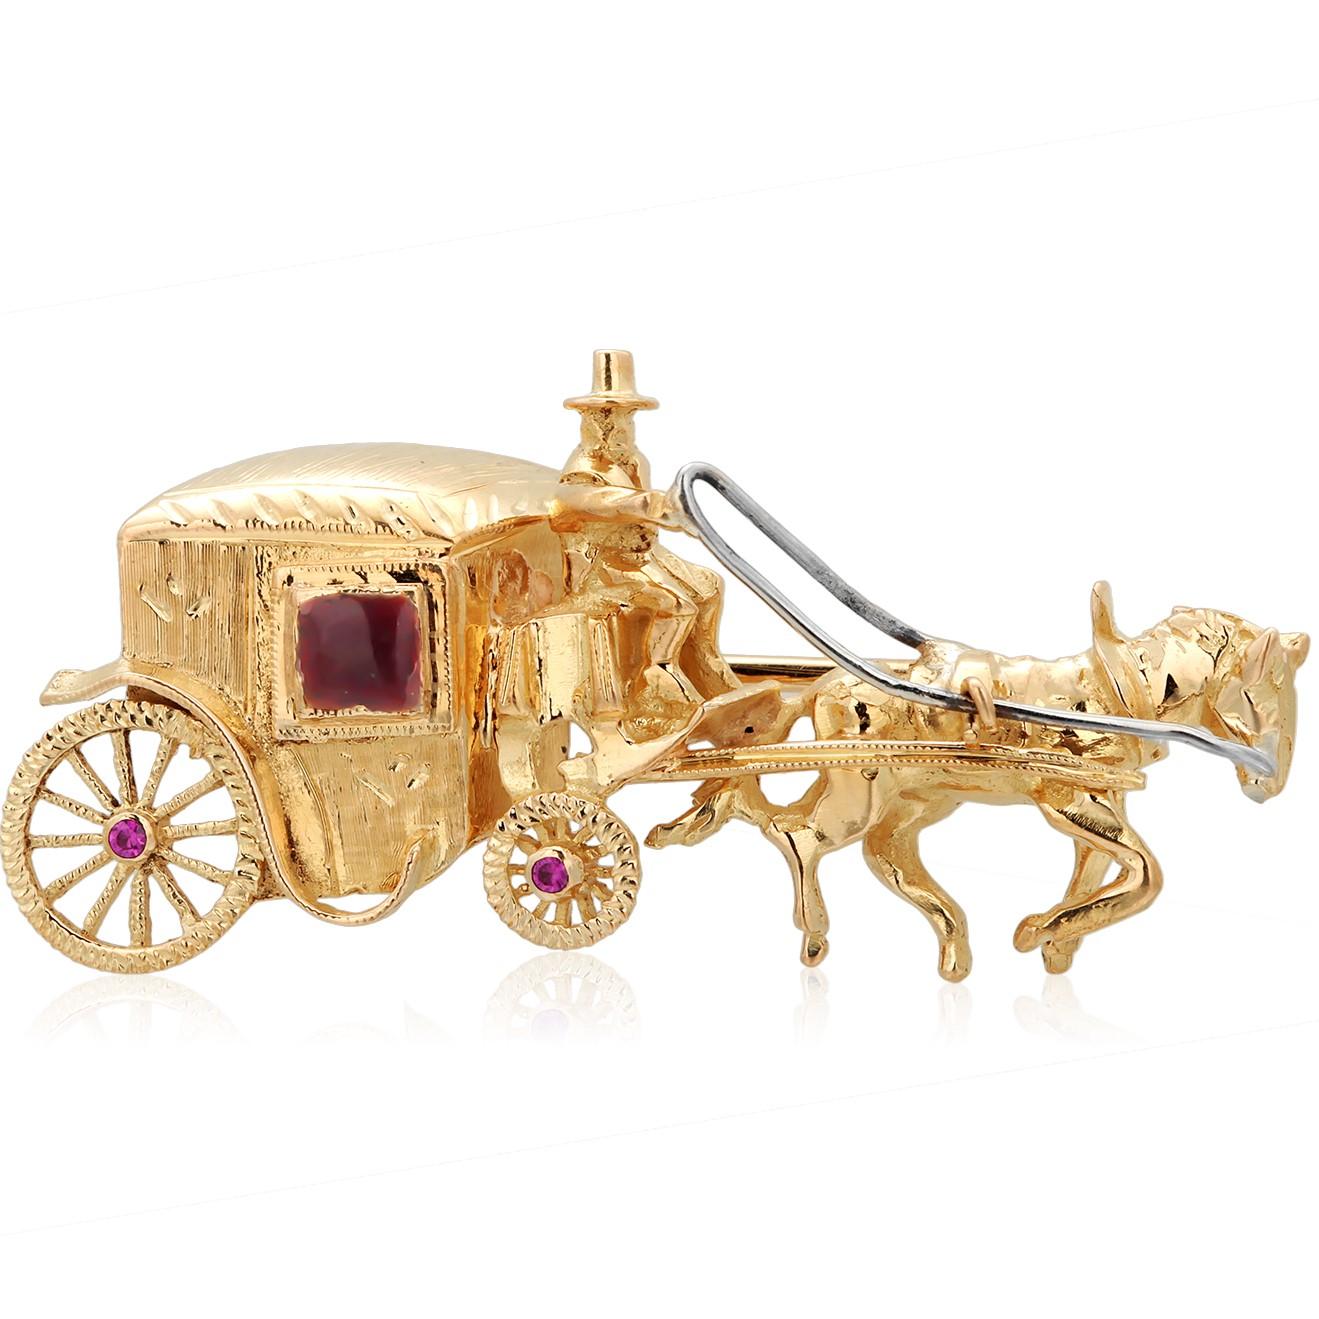 Rétro Broche en or jaune 18 carats, sertie de pierres précieuses, cheval et calèche en vente